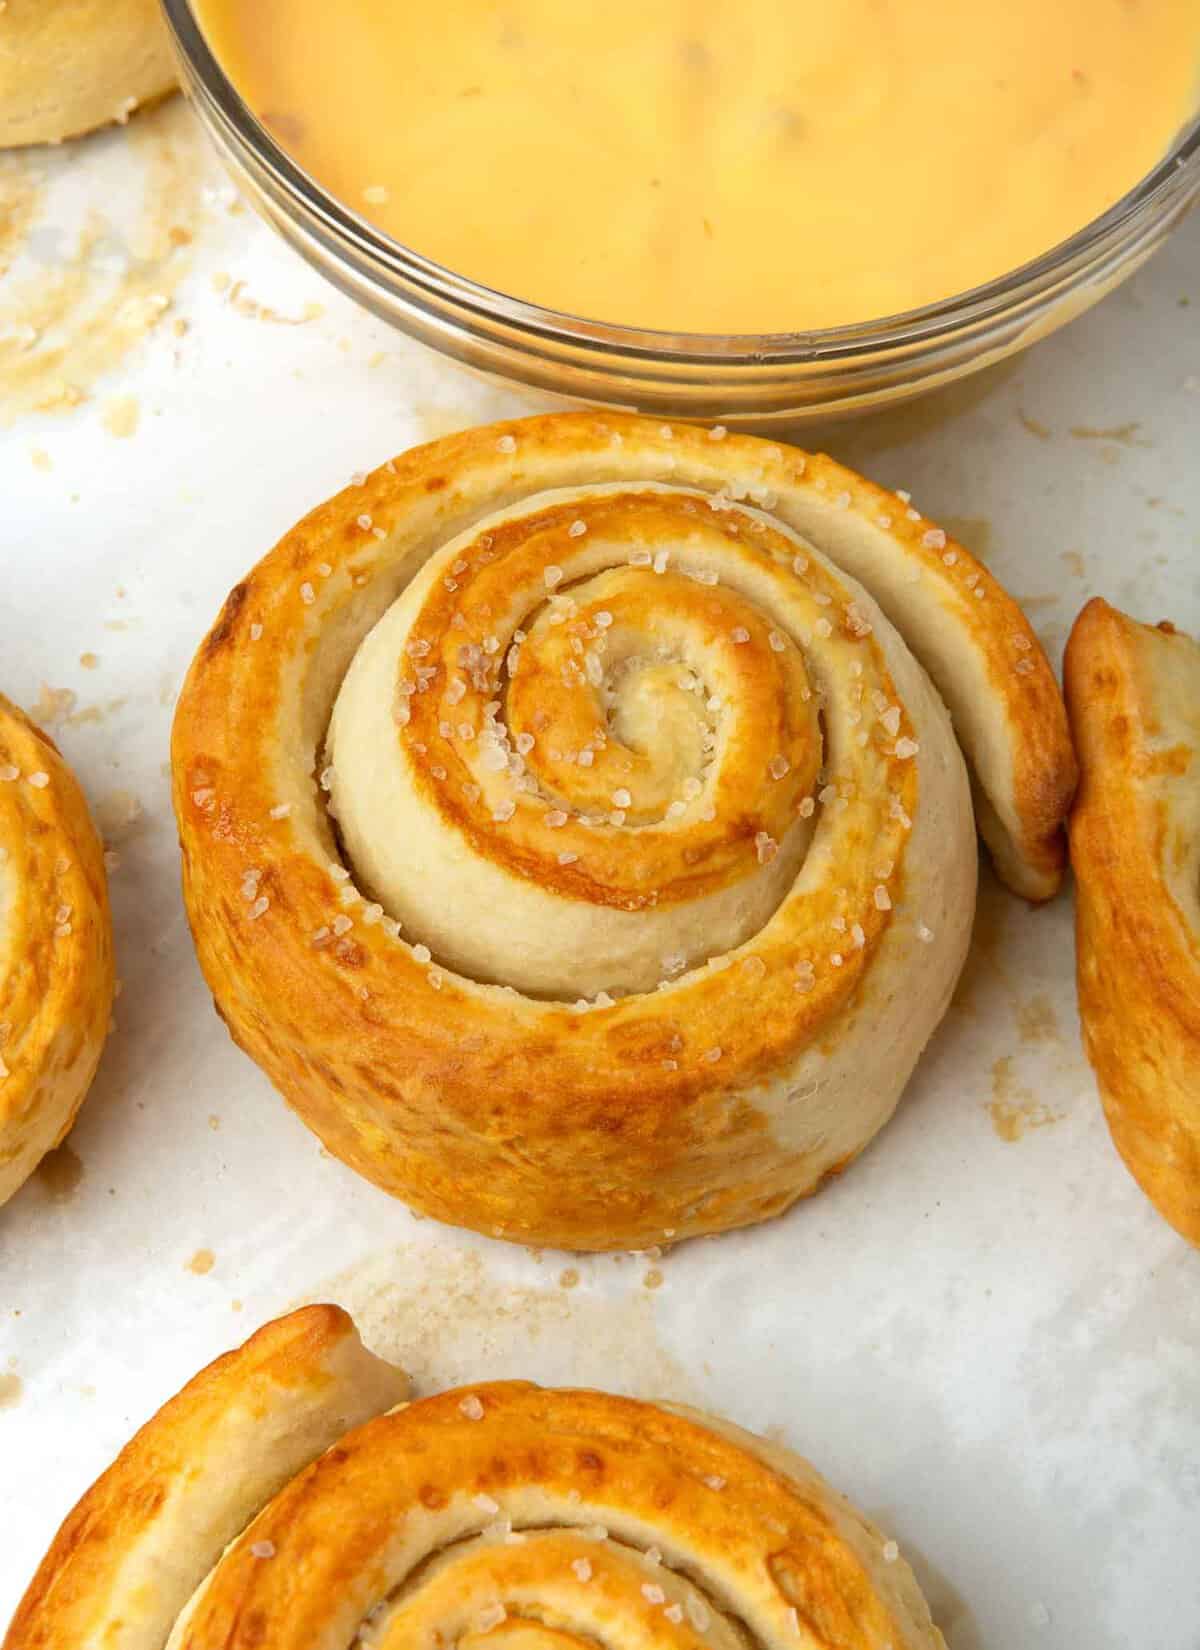 swirled pretzel roll with salt on top